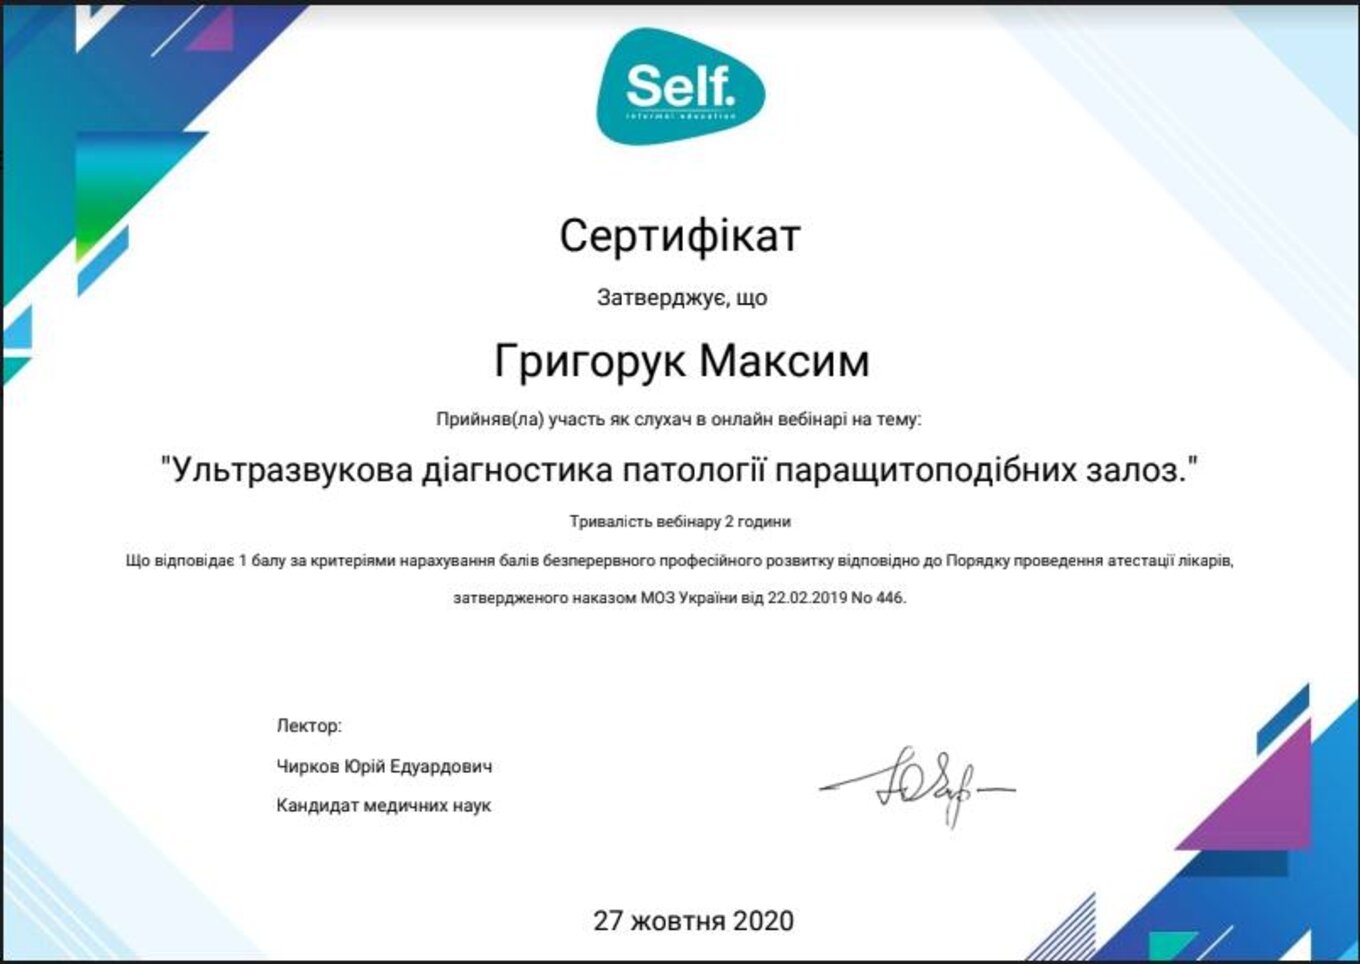 certificates/grigoruk-maksim-antonovich/hemomedika-cert-grigoruk-15.jpg